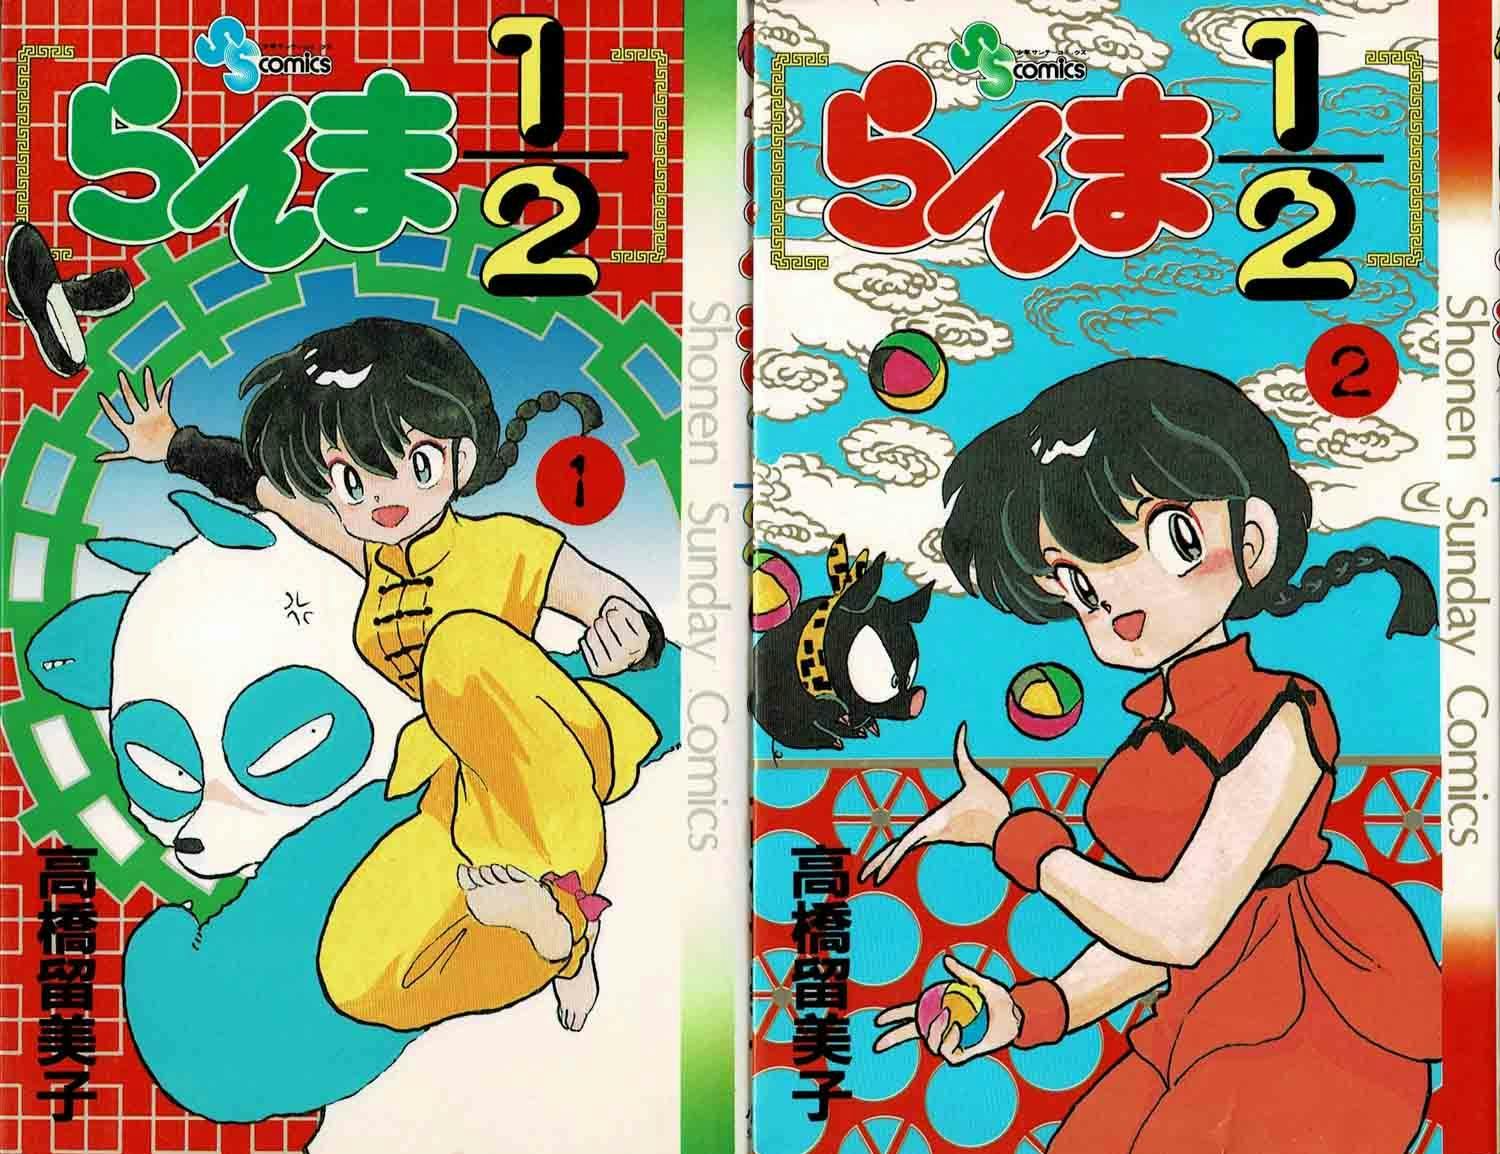 The Japanese manga classic, Rama 1/2.